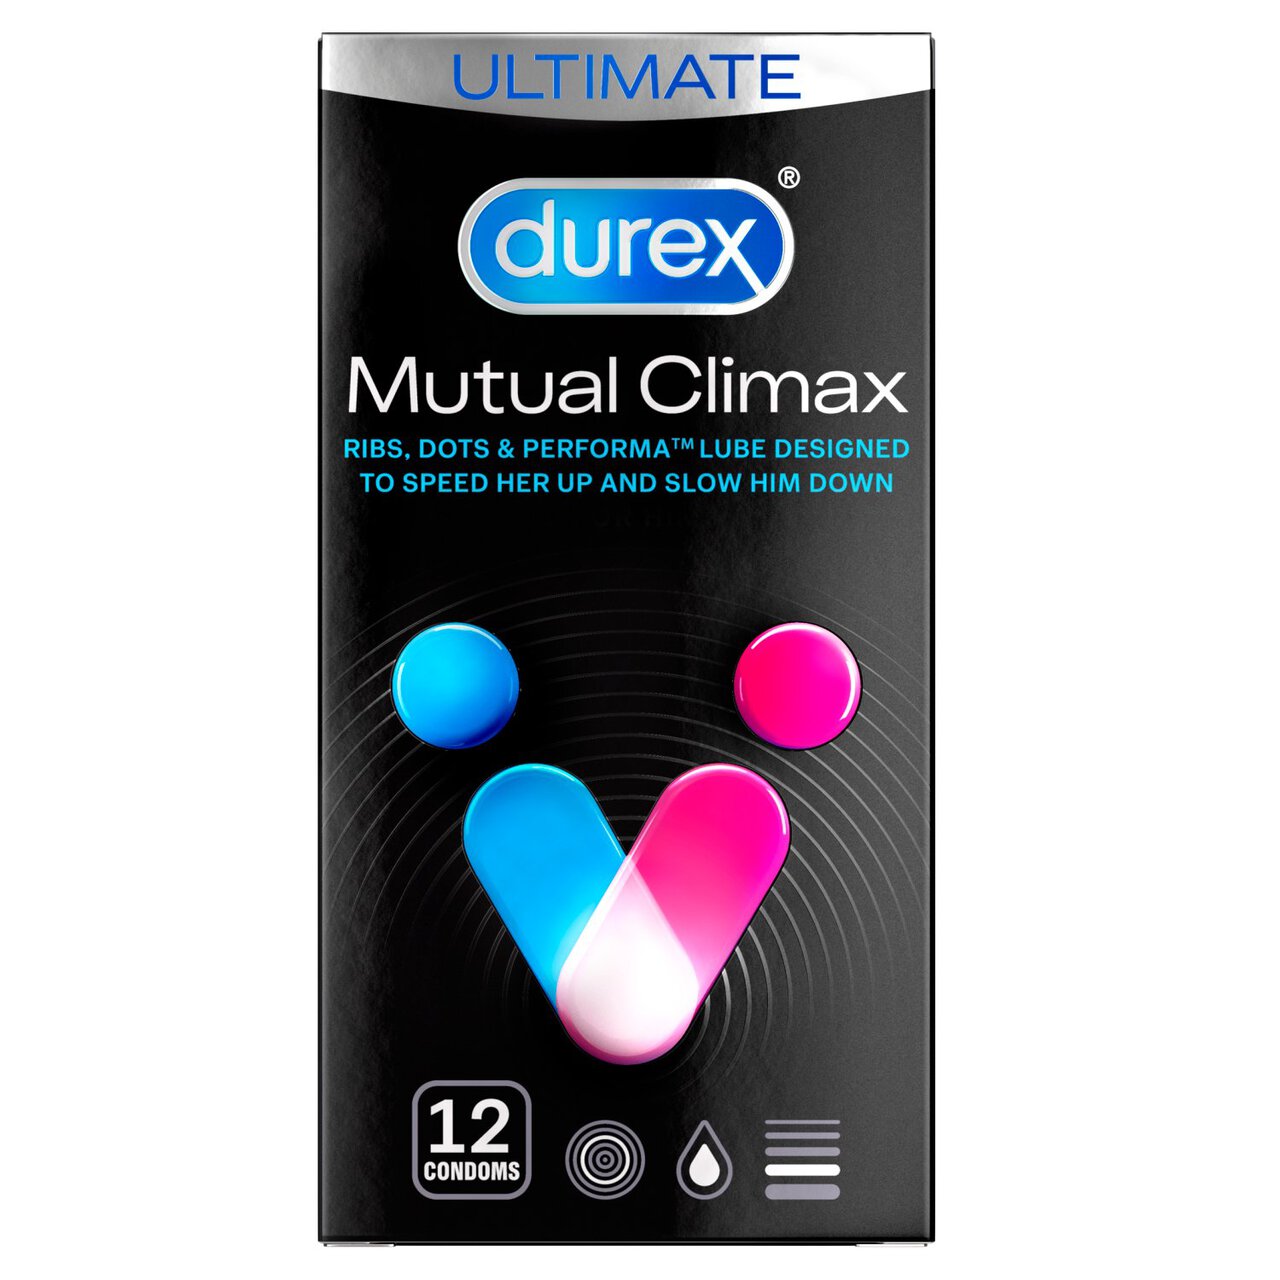 Durex Mutual Climax 12 Condoms 12 per pack